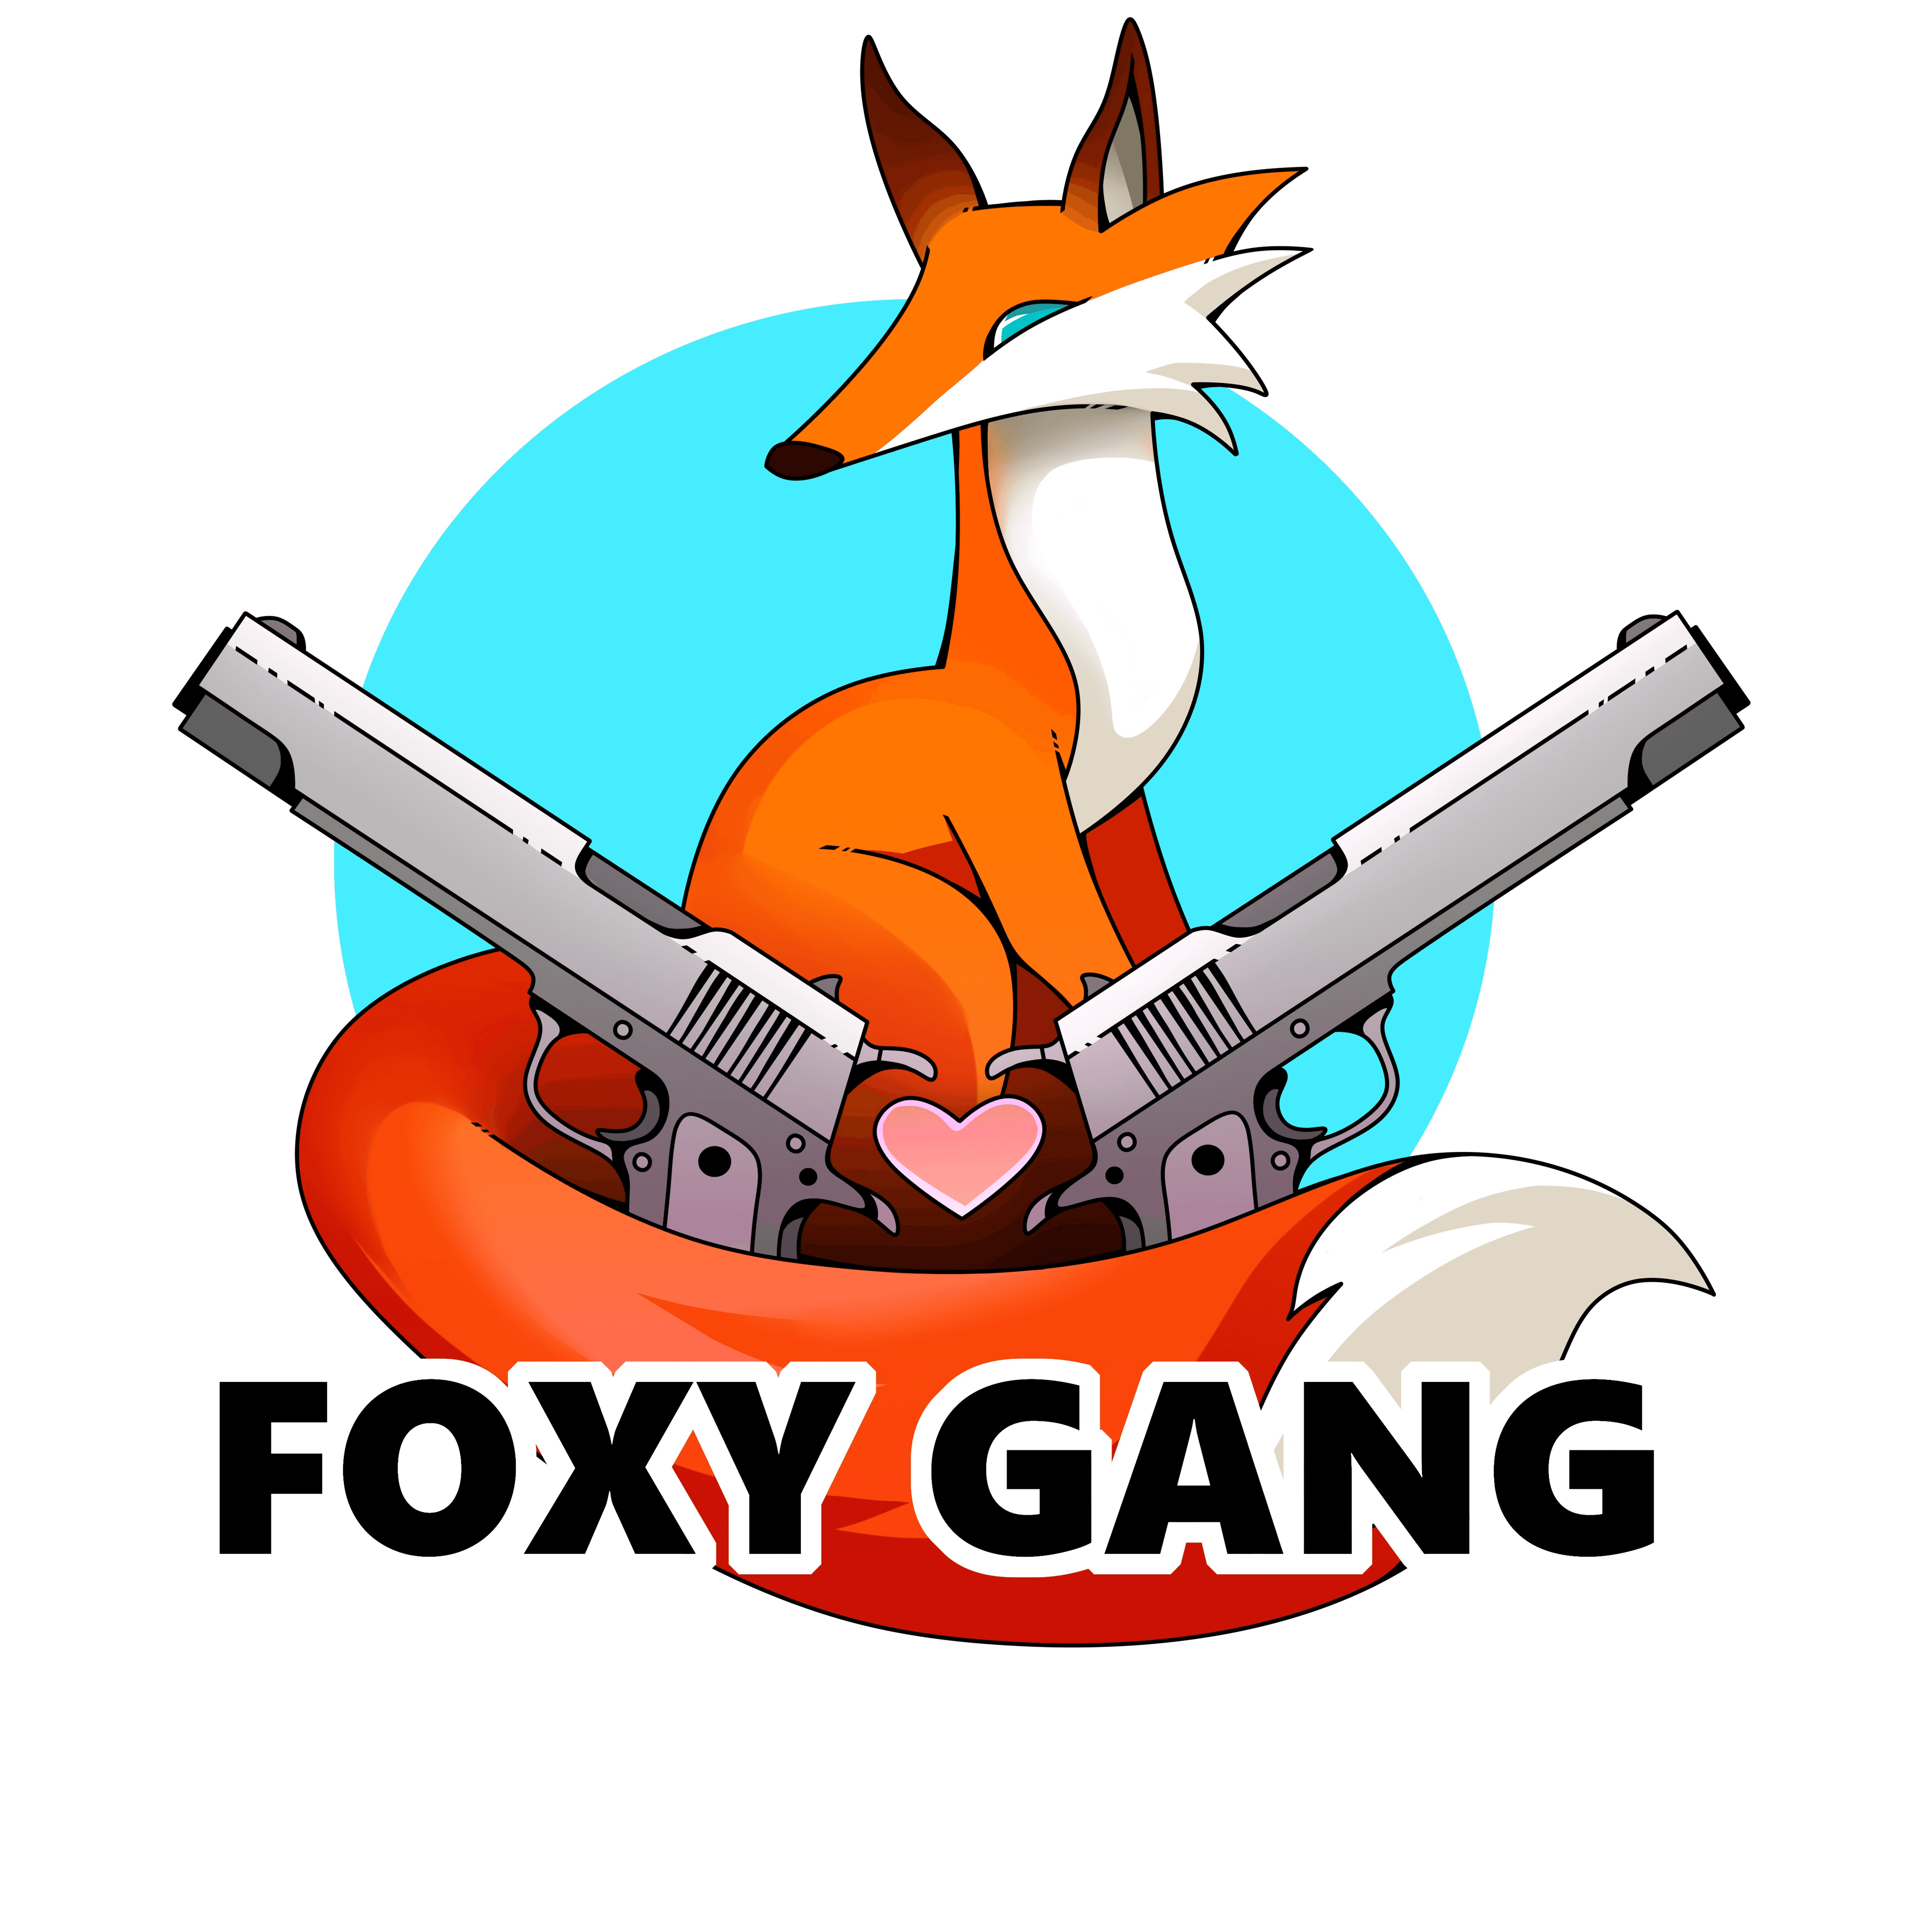 FoxyGang